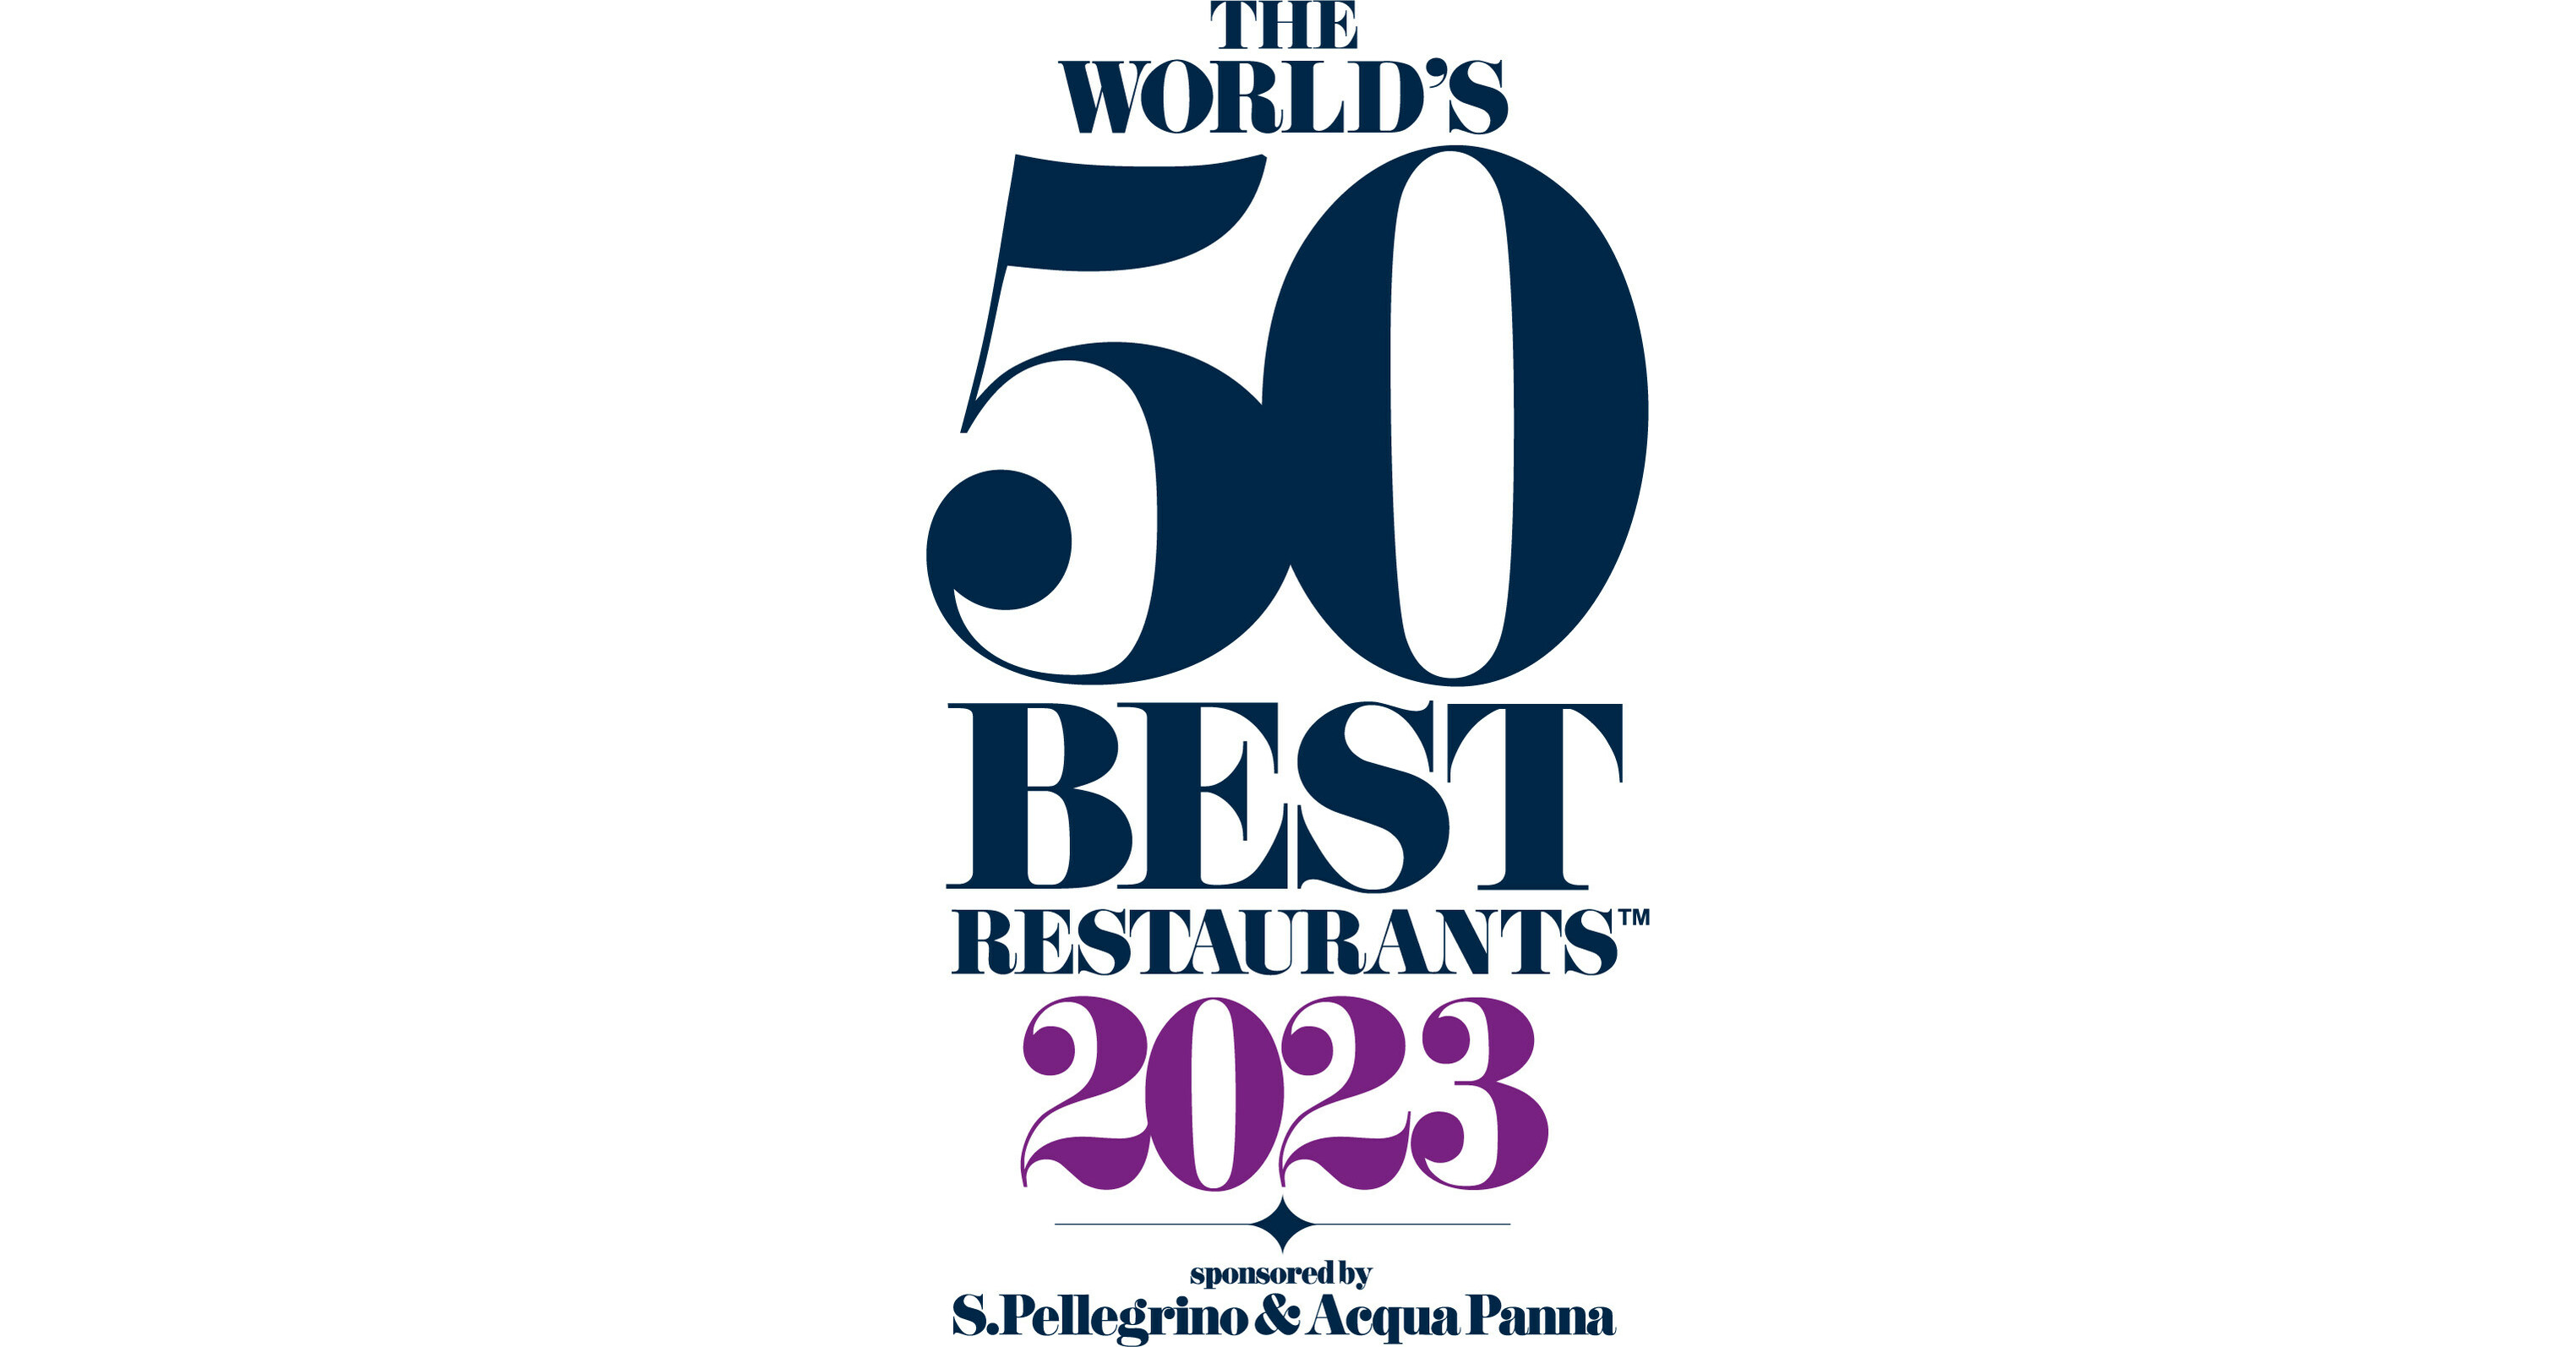 THE WORLD'S 50 BEST RESTAURANTS ANNOUNCES THE 51100 LIST FOR 2023